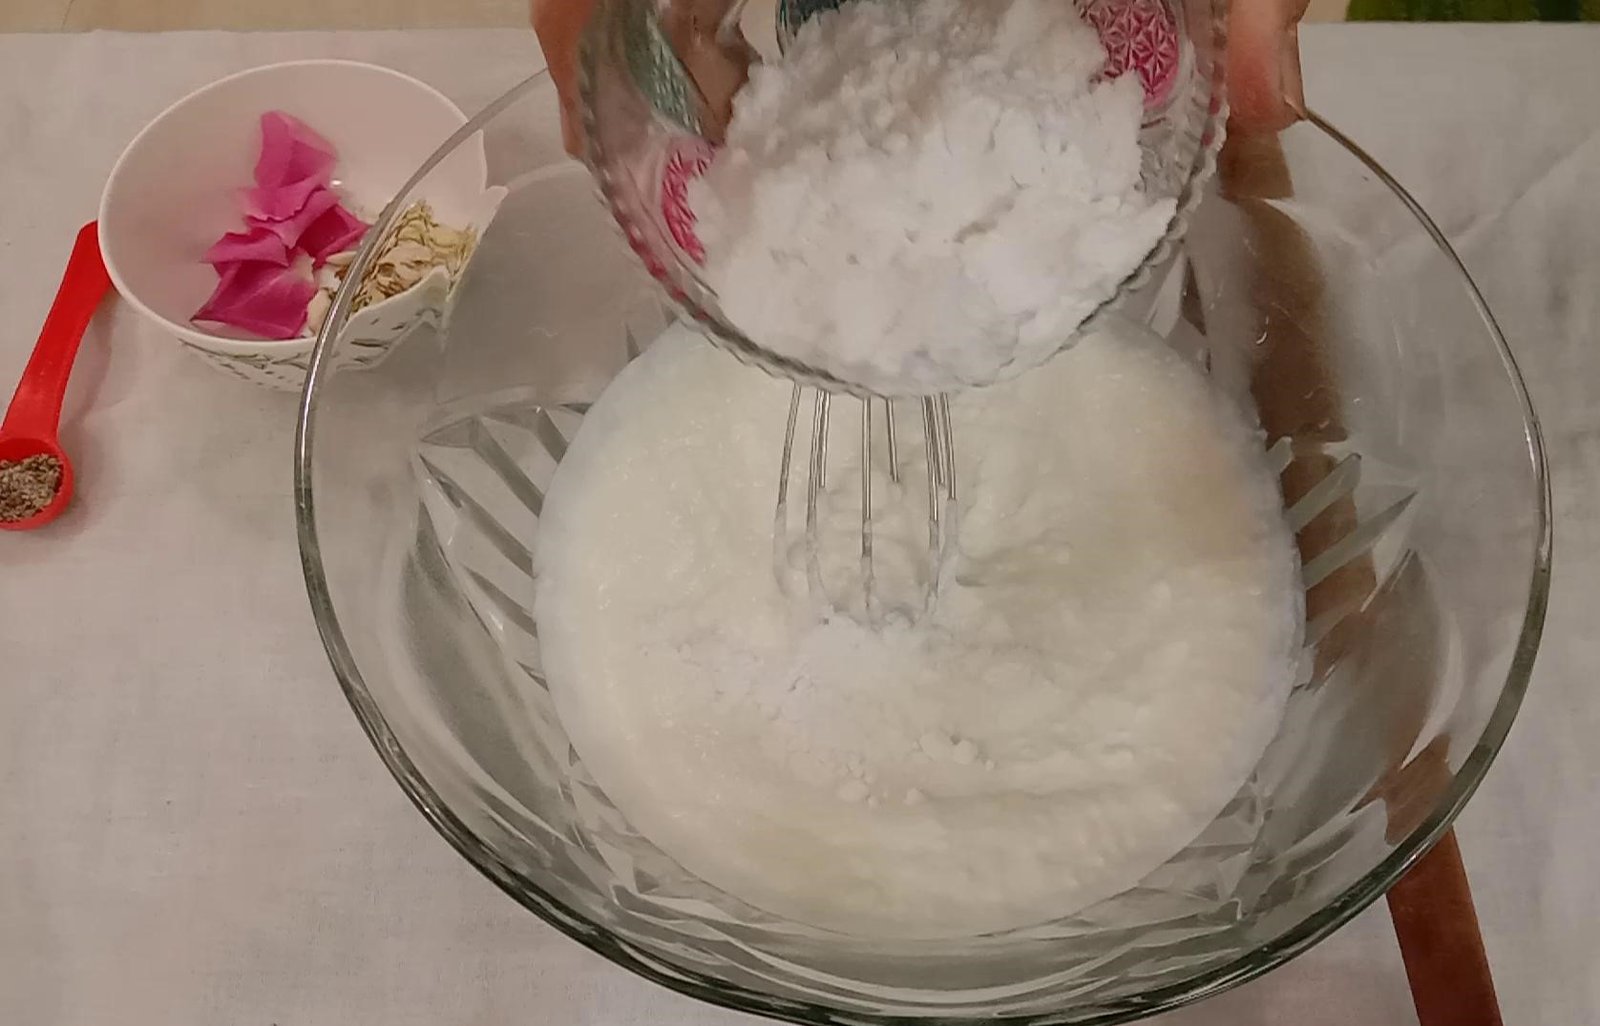 Adding powdered sugar, Sweet Lassi and Masala Lassi recipe.